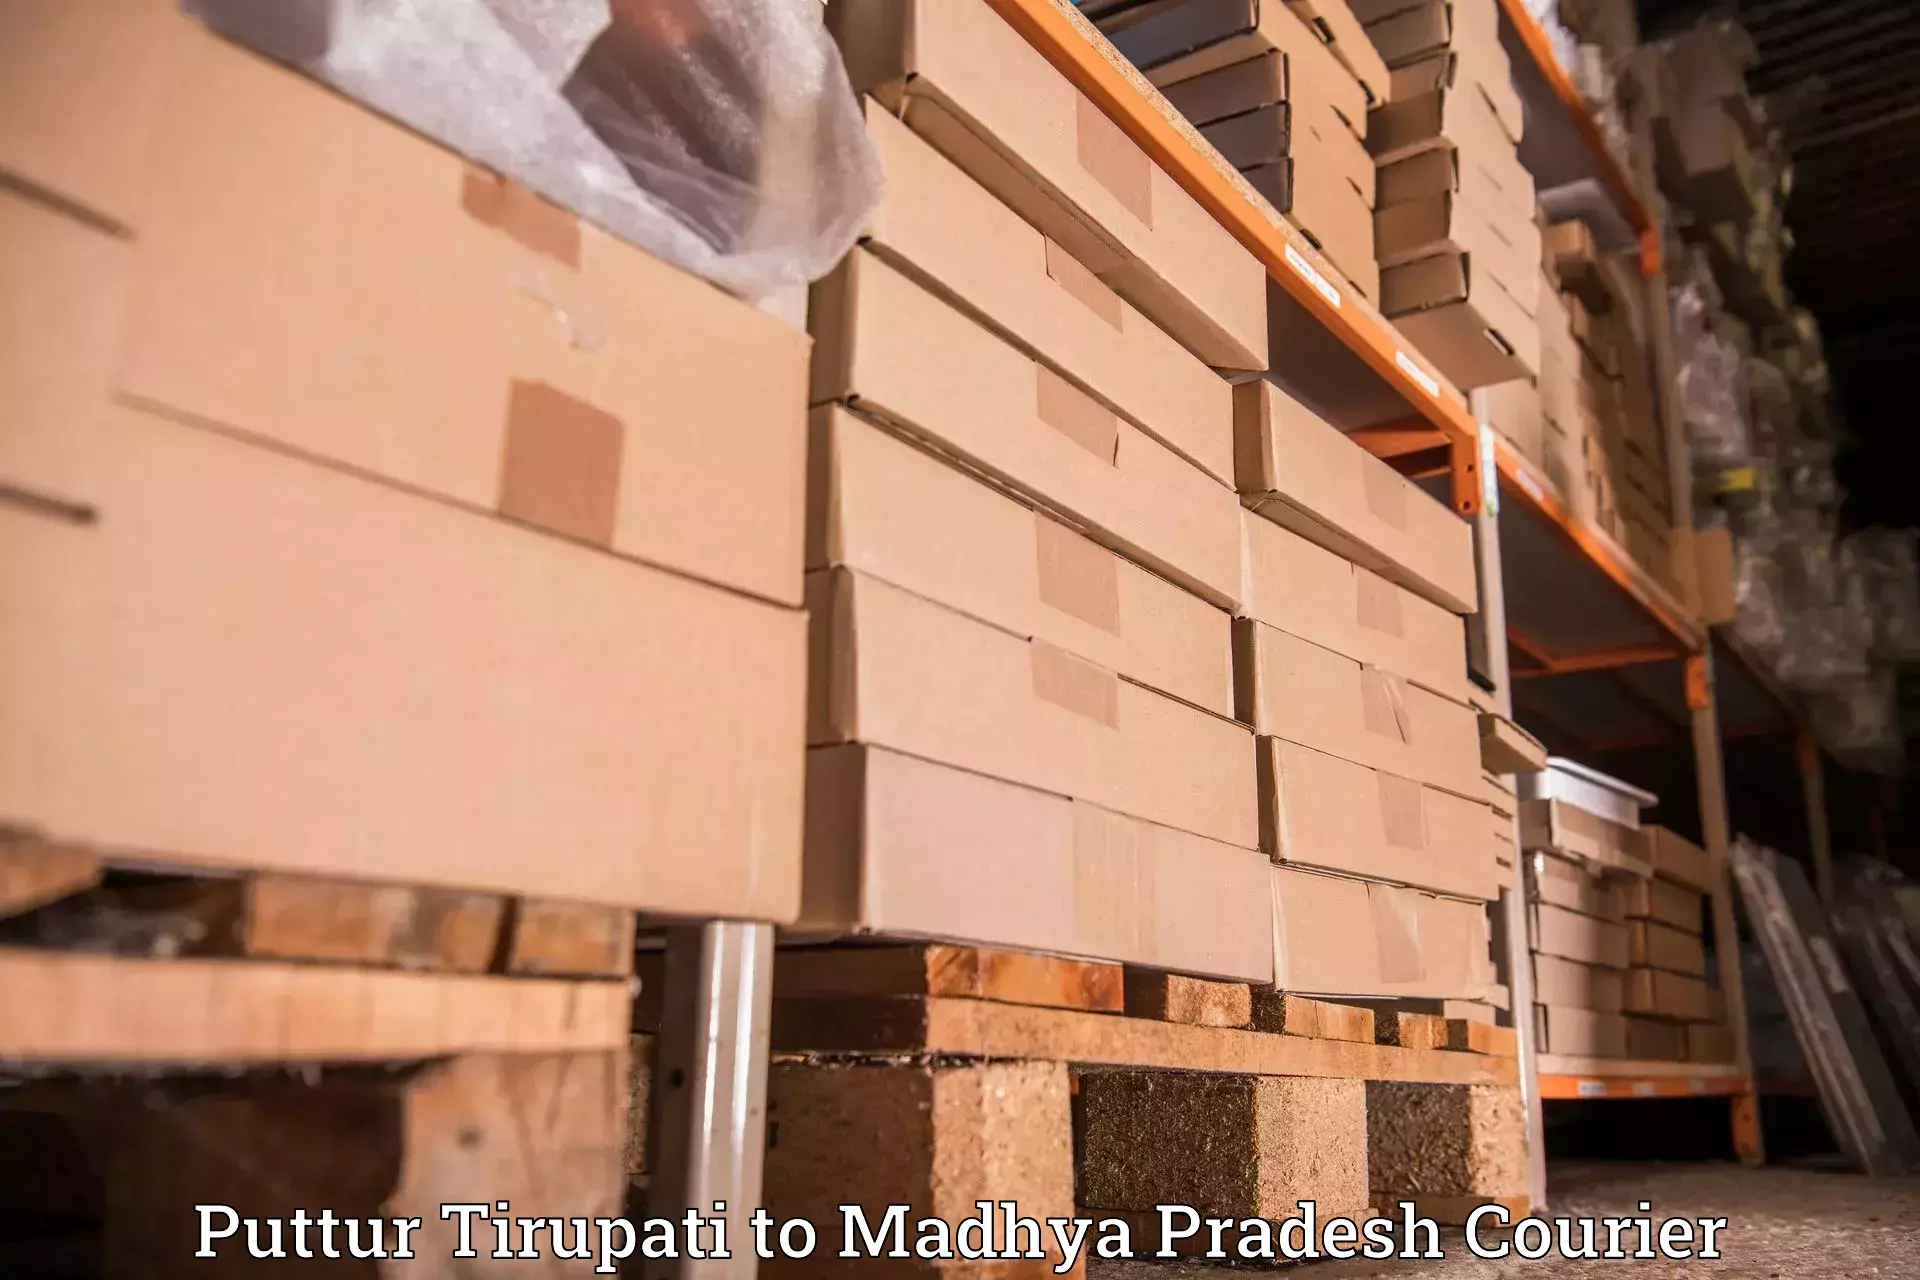 Advanced shipping network Puttur Tirupati to Ratlam